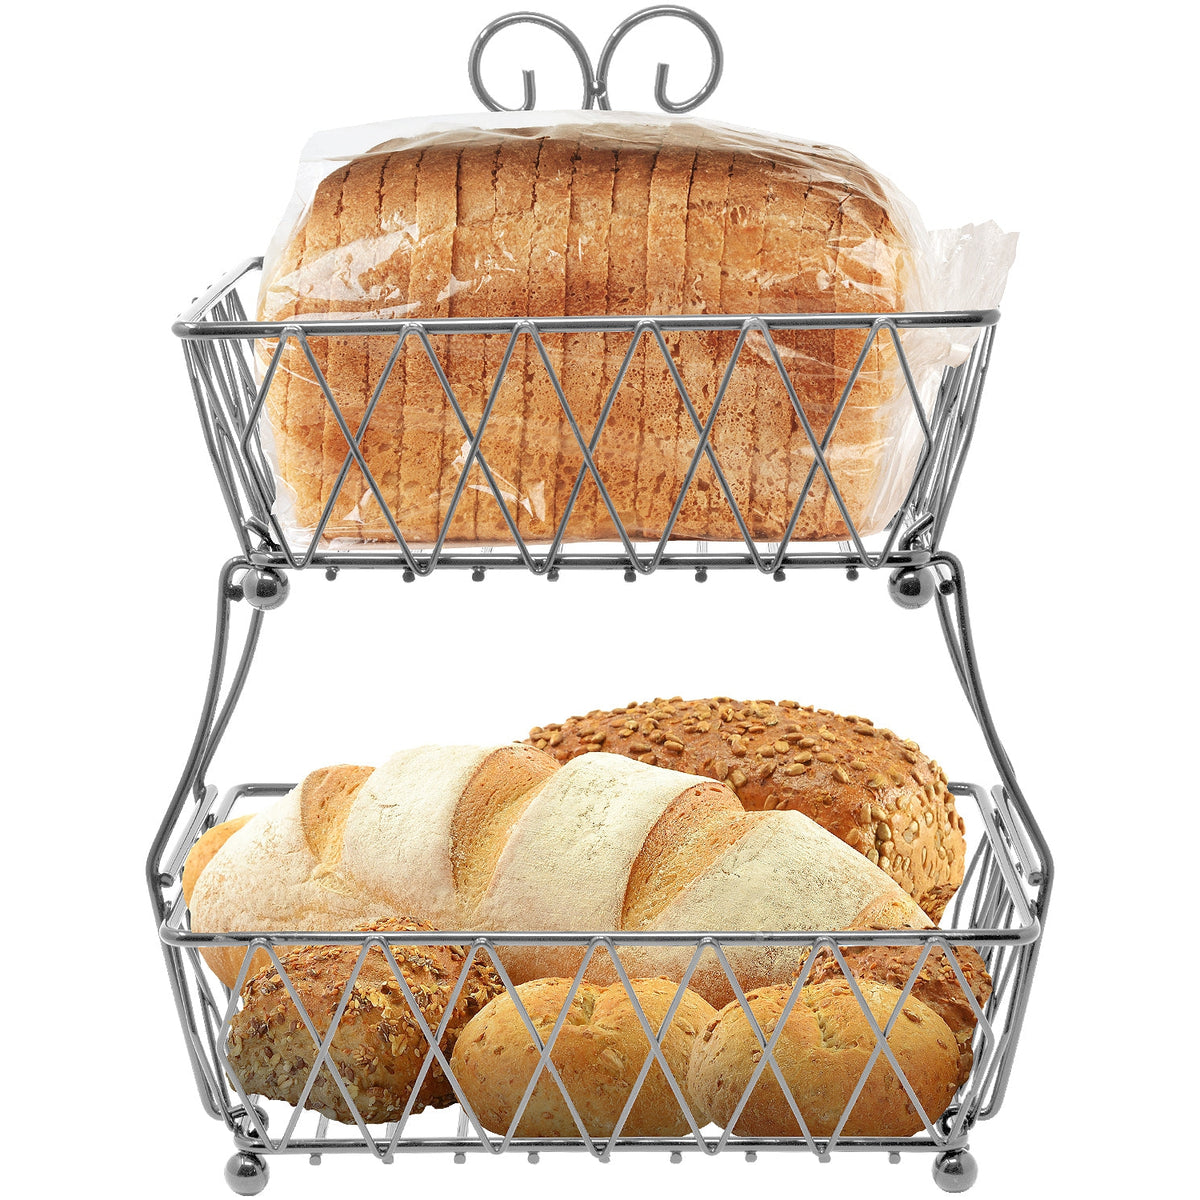 2-Tier Wire Bread Basket Stand